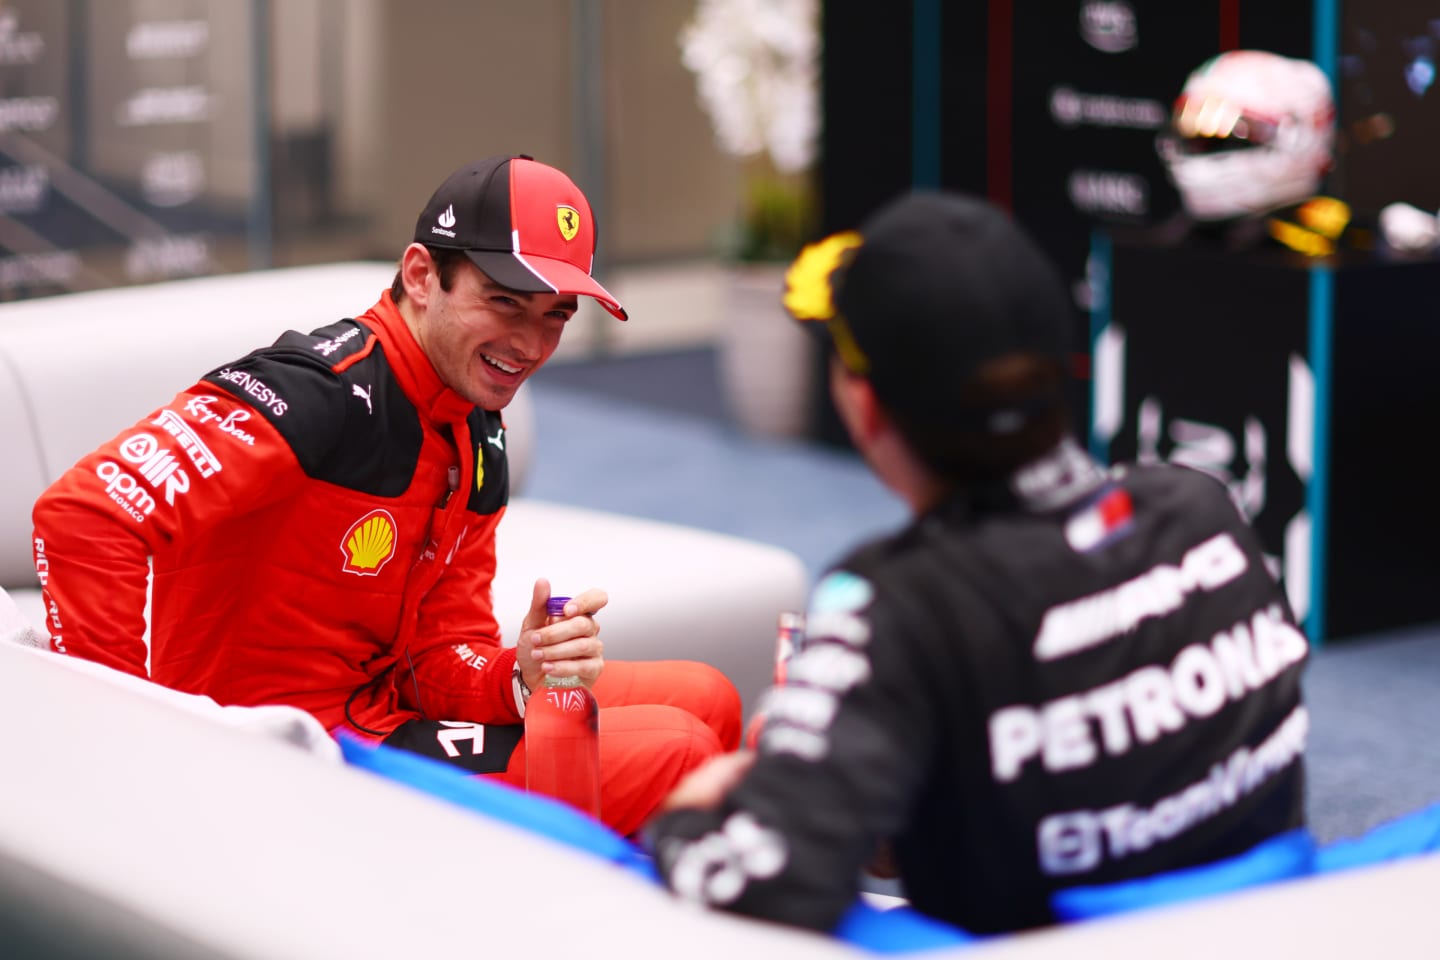 ABU DHABI, UNITED ARAB EMIRATES - NOVEMBER 26: Second placed Charles Leclerc of Monaco and Ferrari